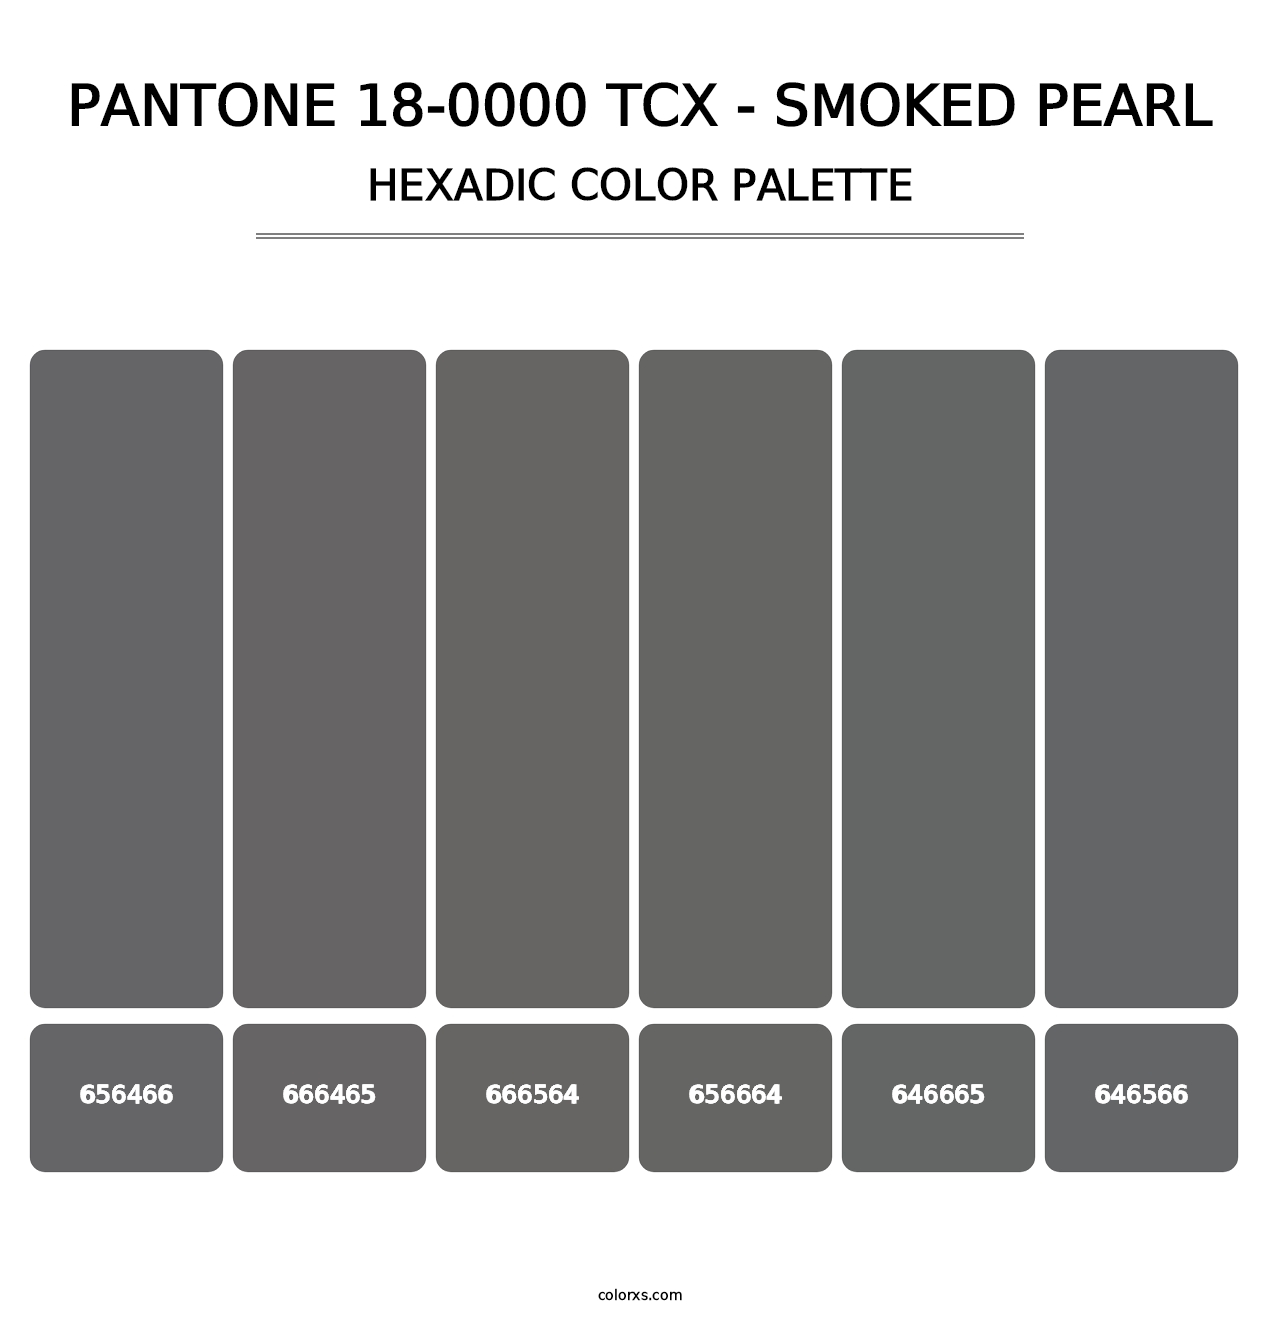 PANTONE 18-0000 TCX - Smoked Pearl - Hexadic Color Palette